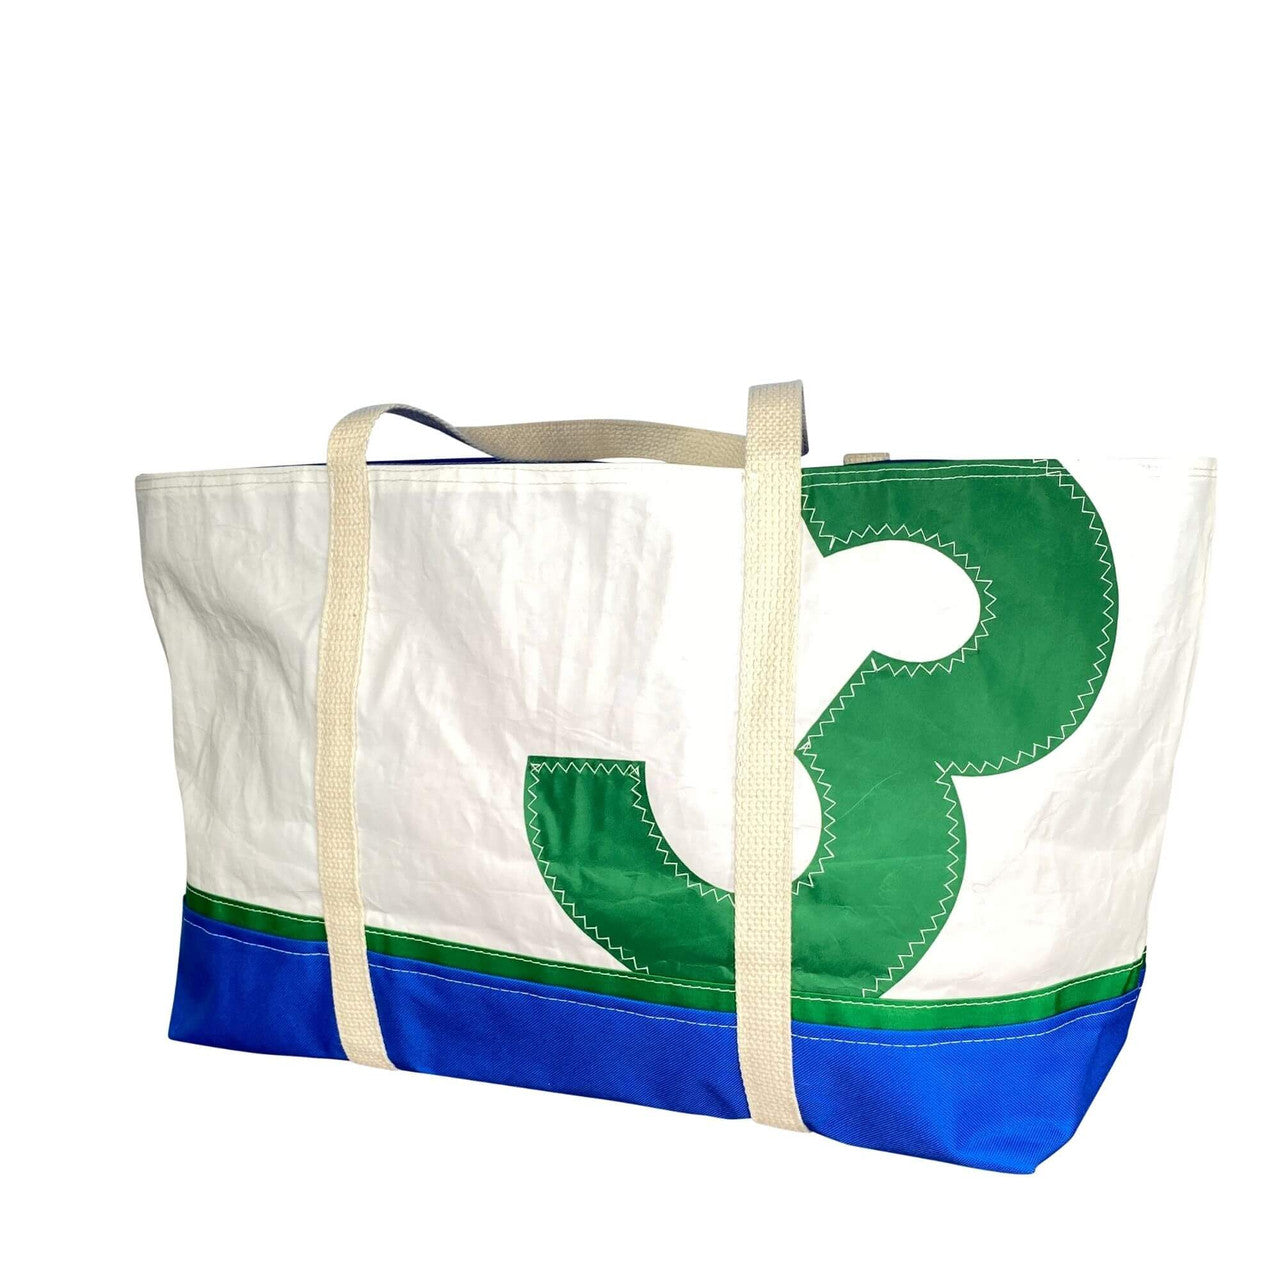 Recycled Sail Bag, Tote Bag Handmade from Sails, Blue & Green Handbags New England Trading Co   